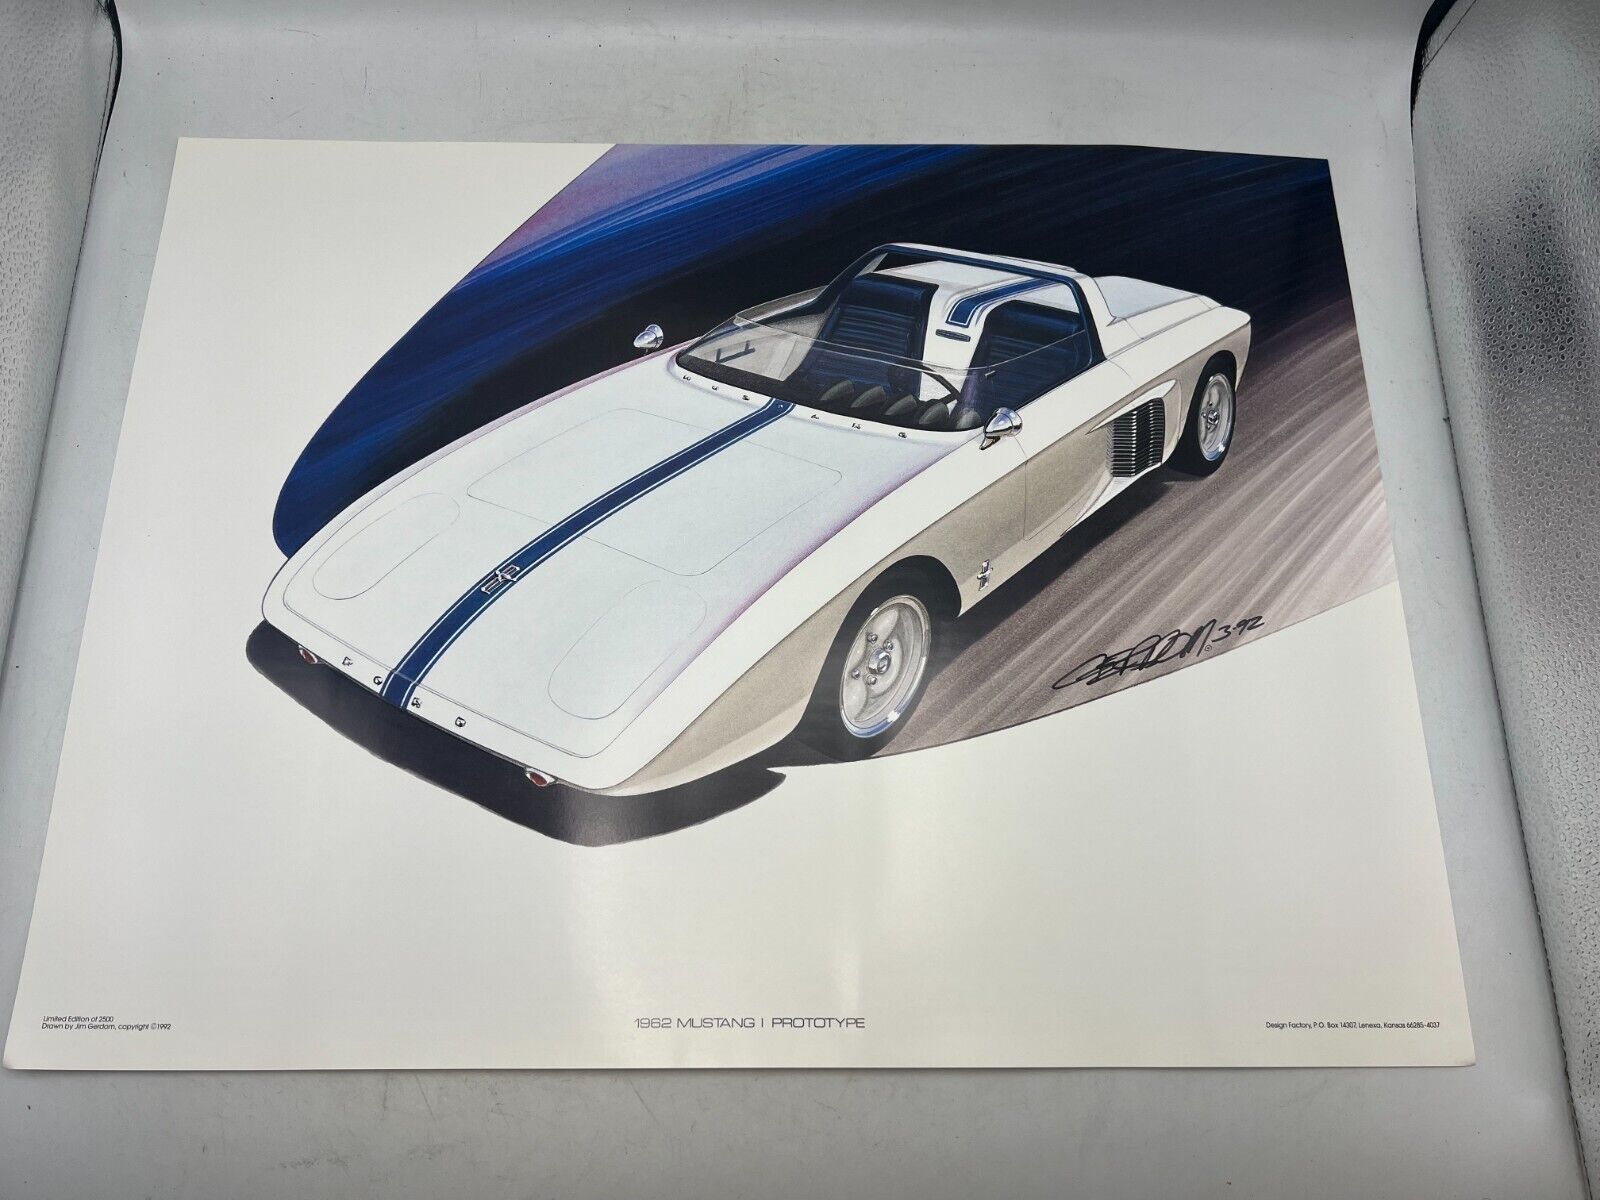 1962 Mustang I Prototype Poster Print 24 x 18 Limited Edit 1/2500 Jim Gerdom